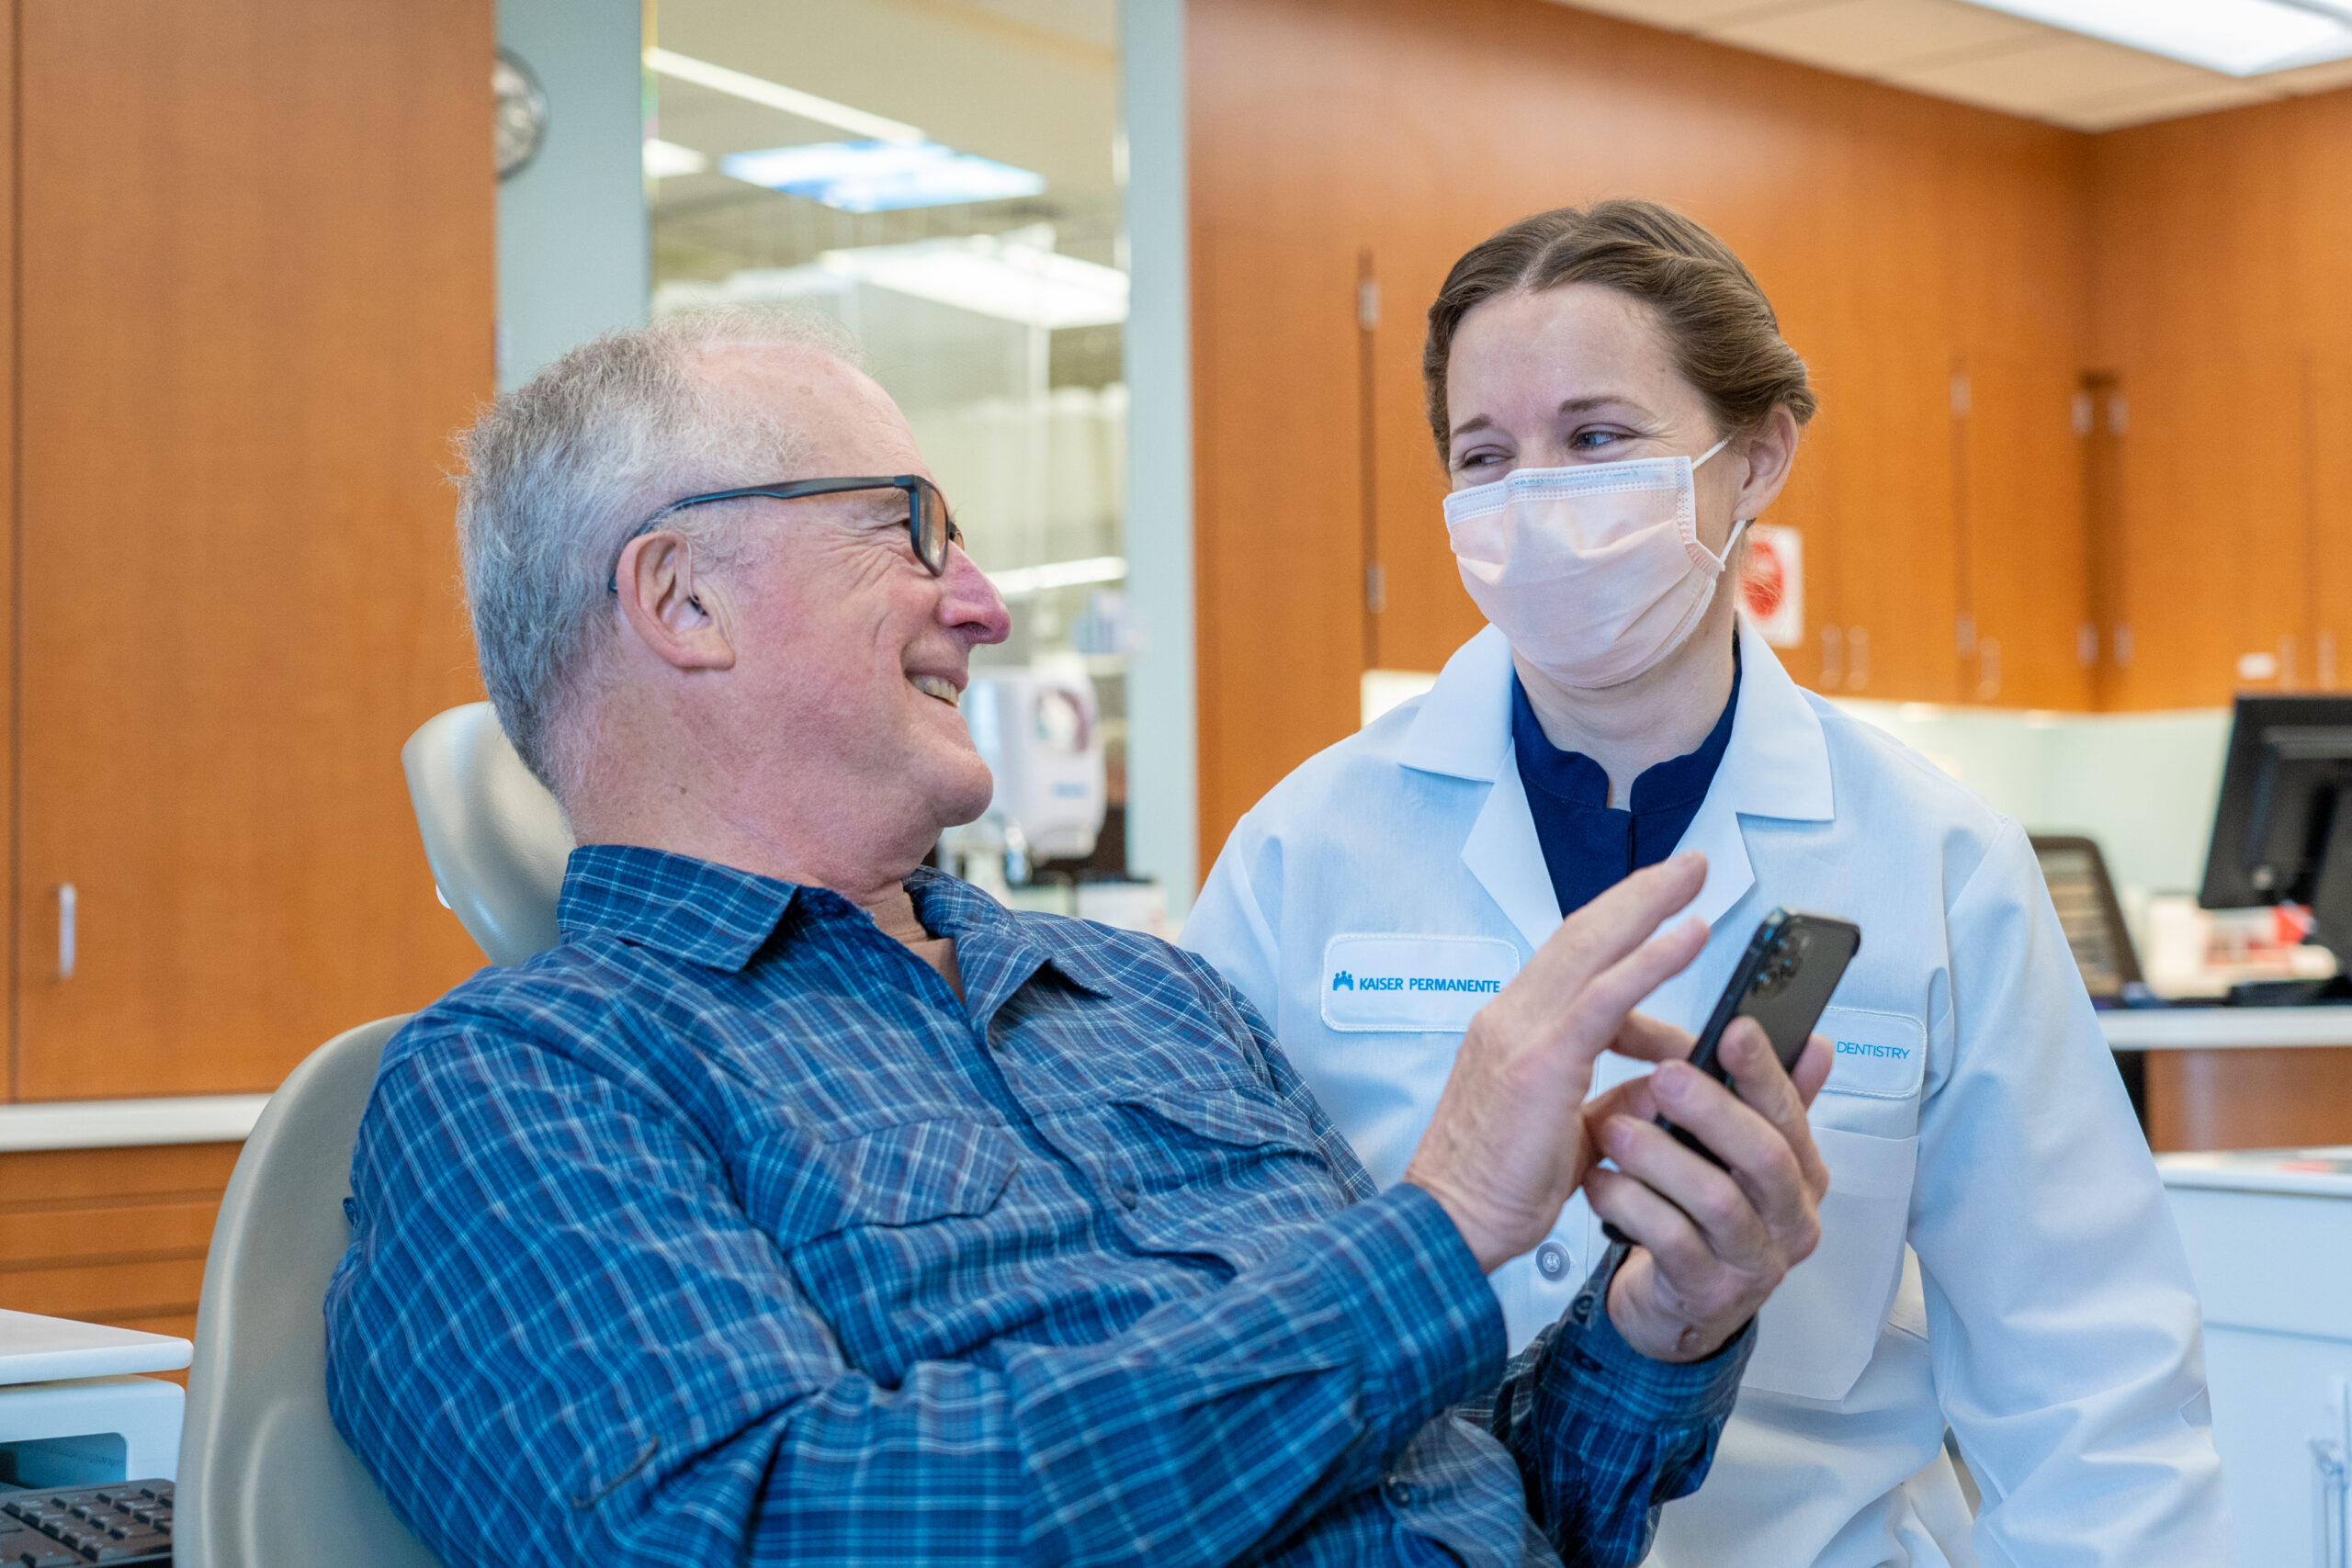 Routine dental visit leads to brain lymphoma diagnosis Image